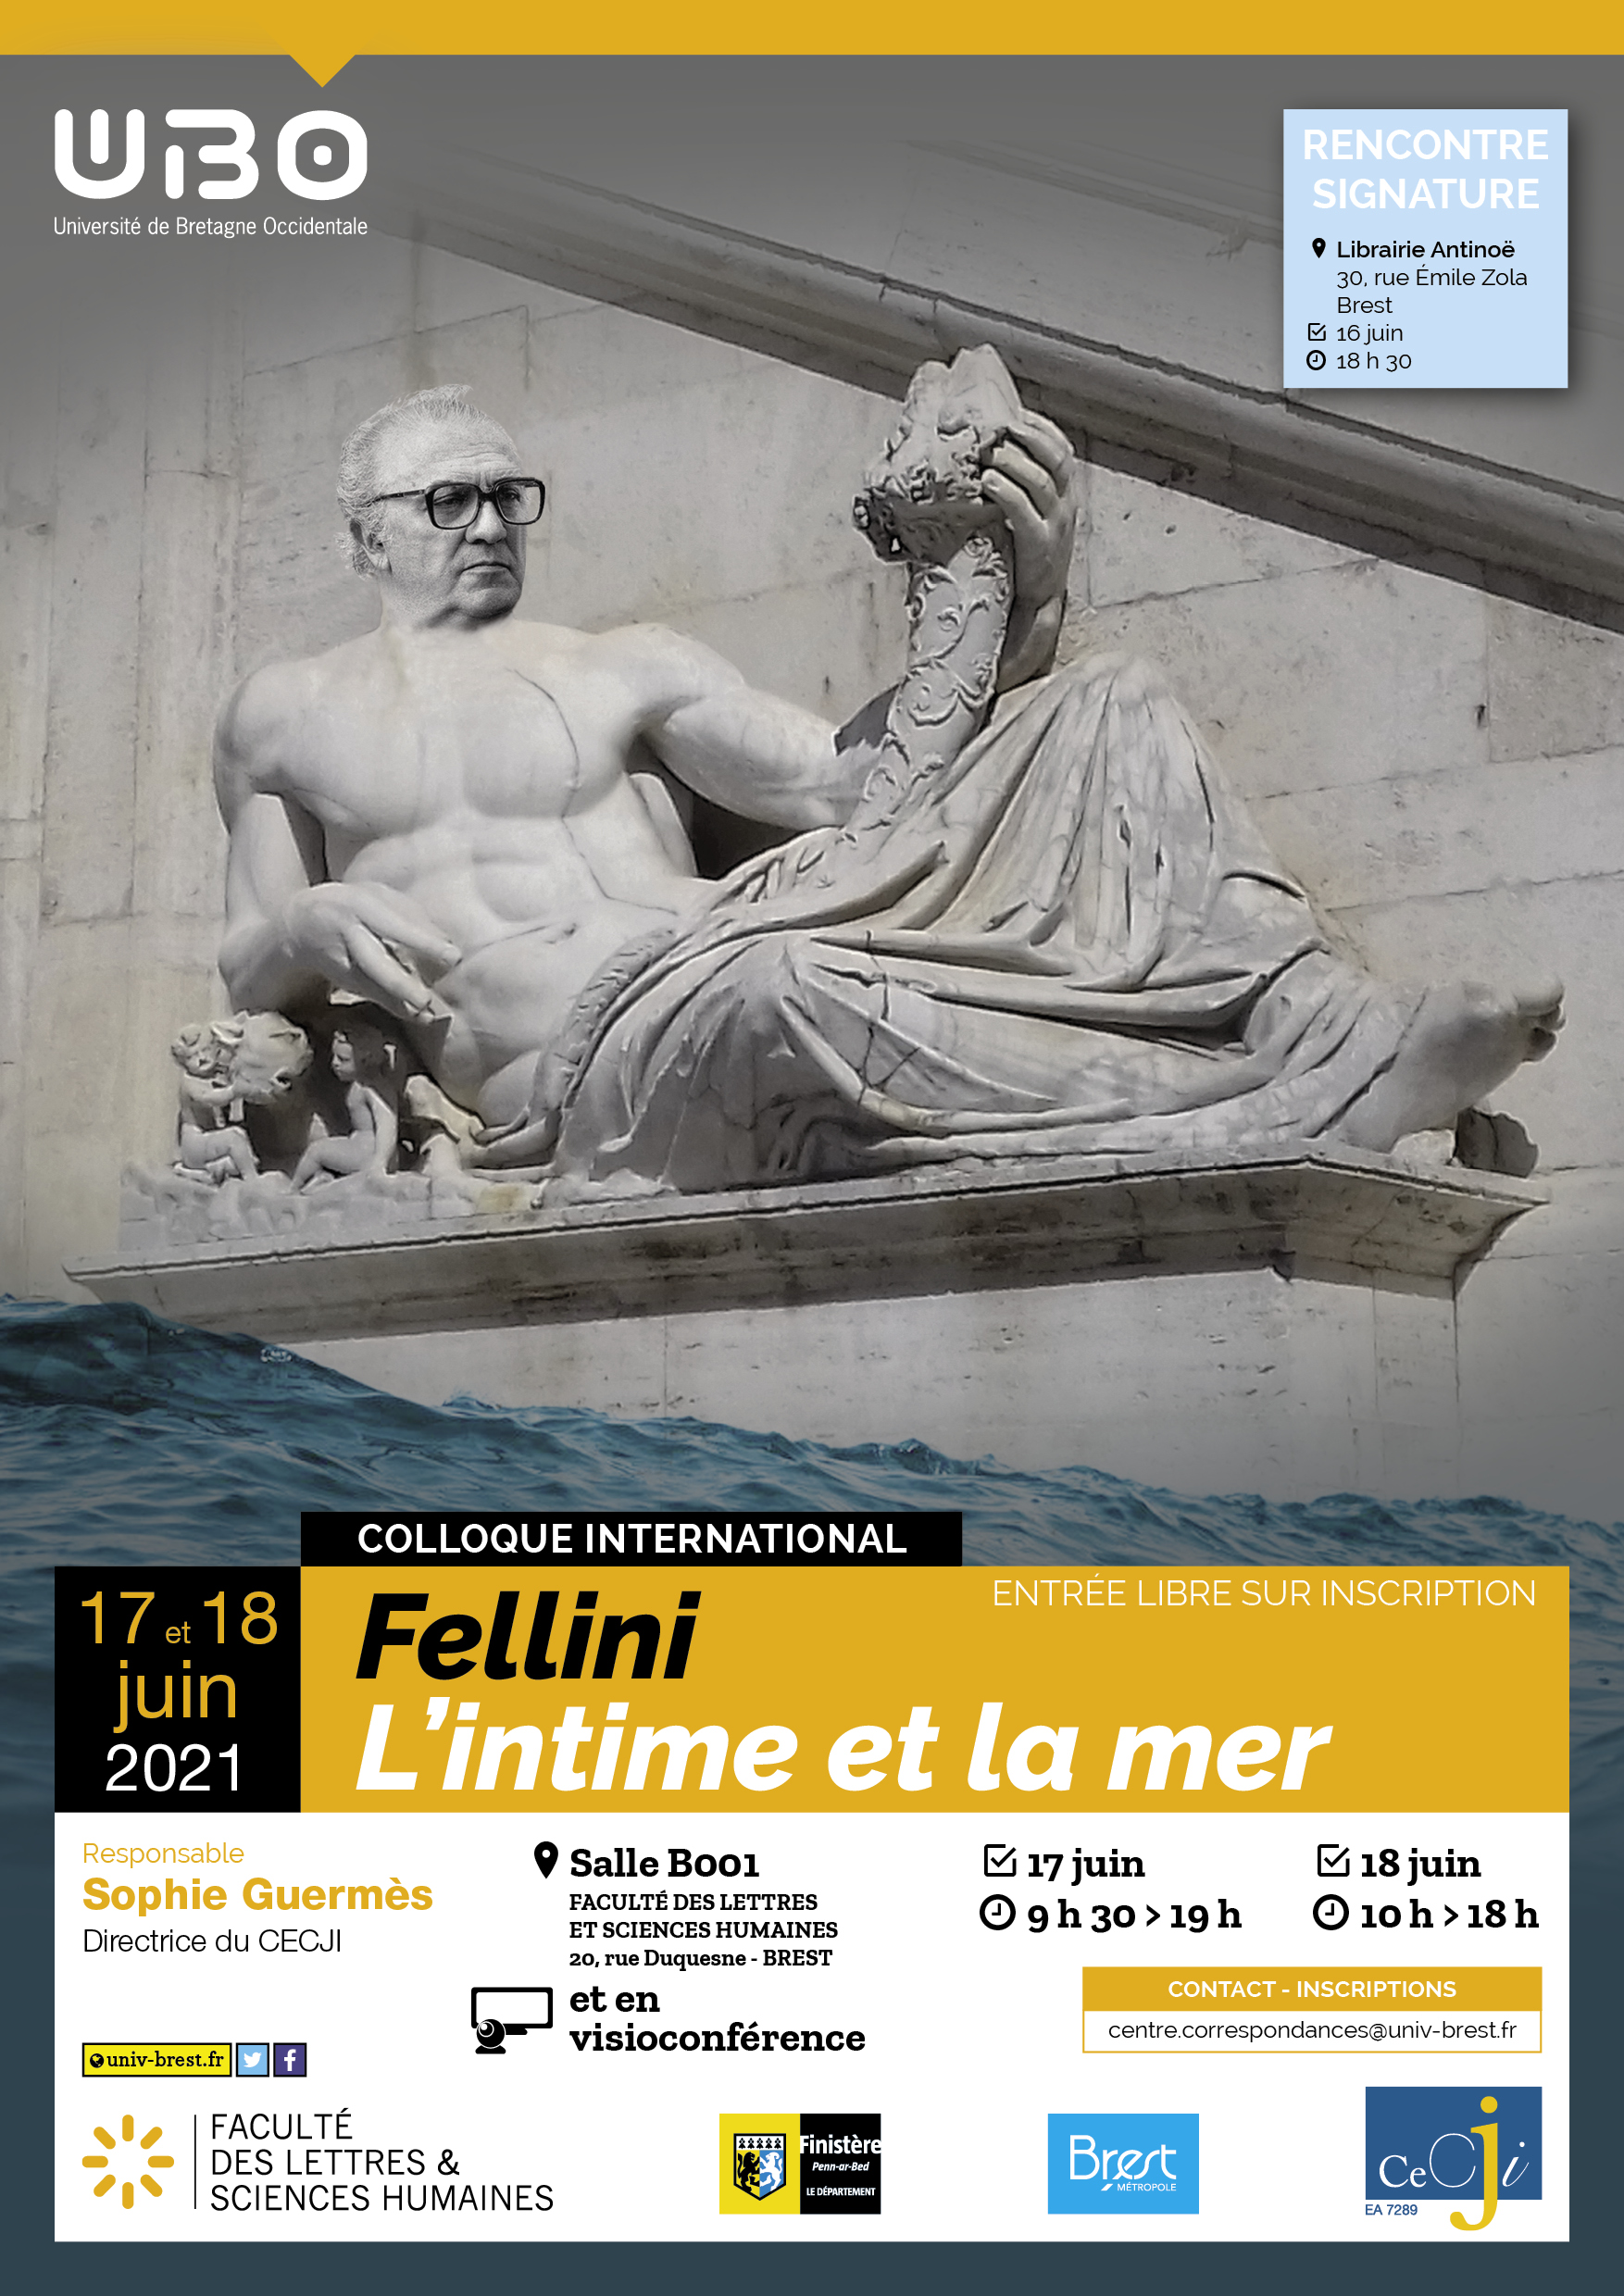 Fellini L'intime et la mer